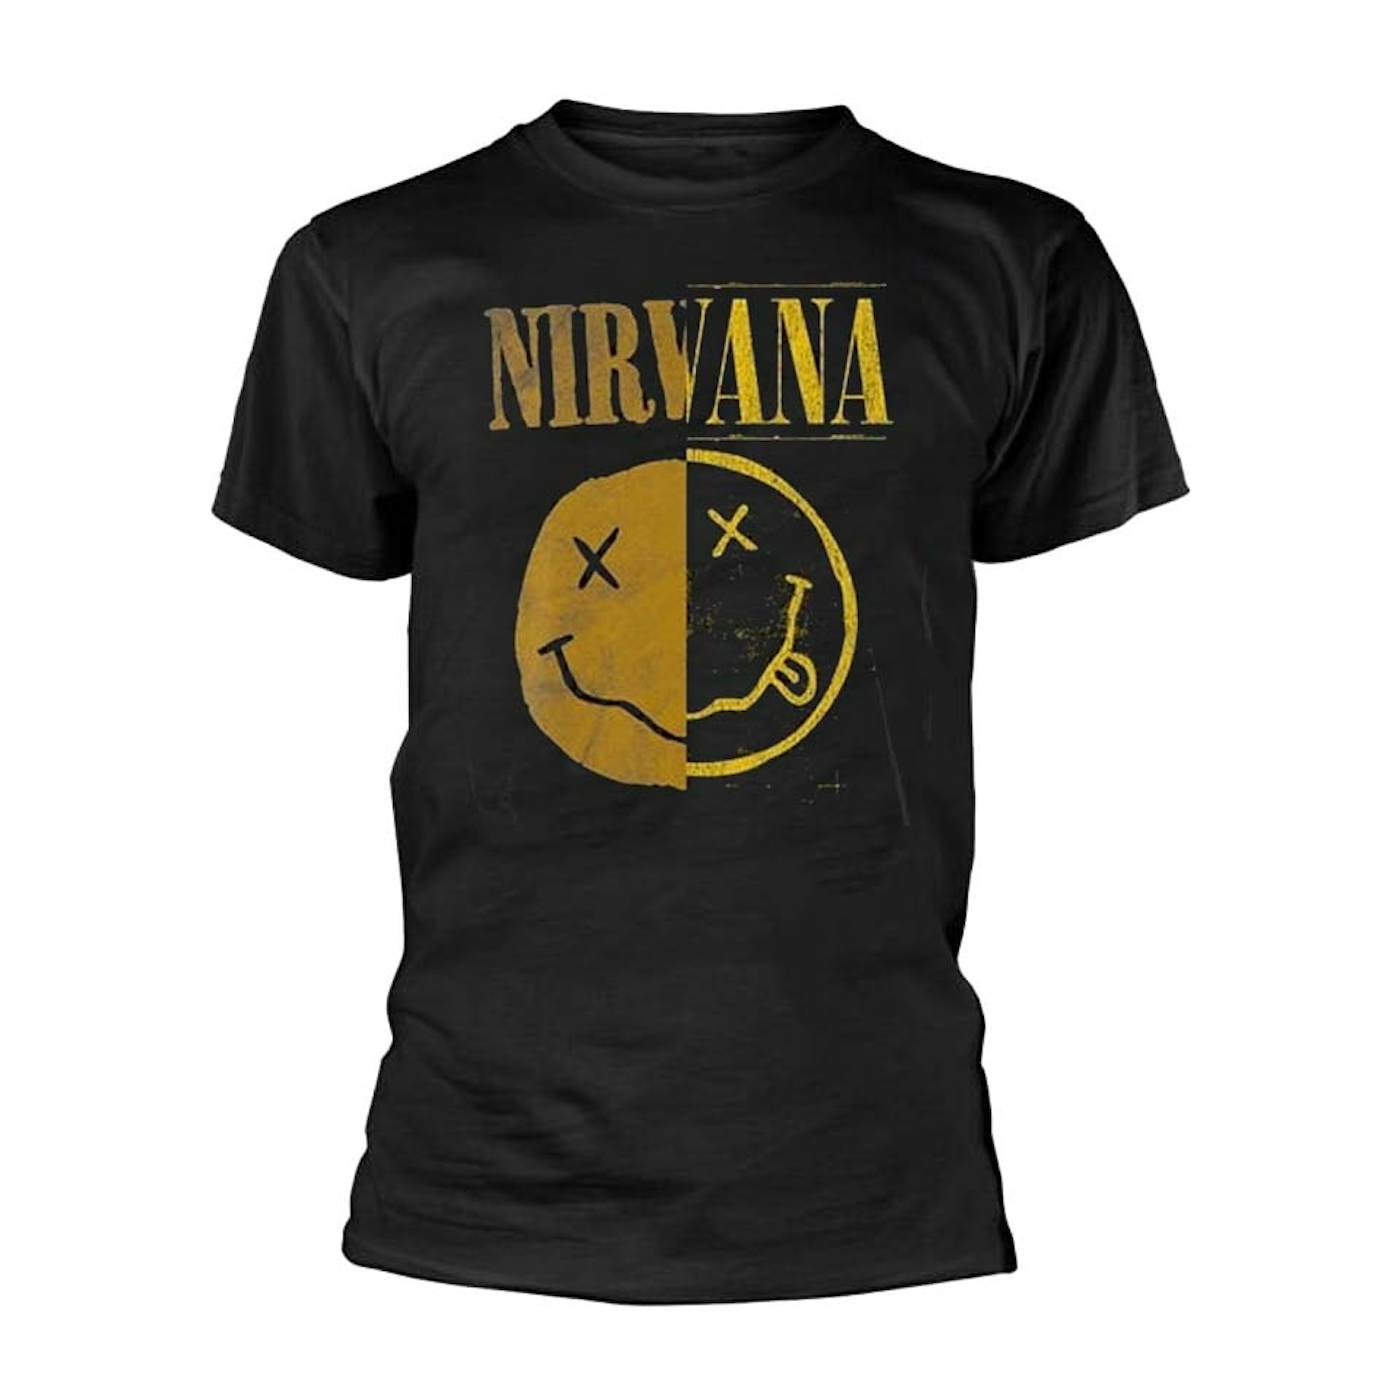 Nirvana T Shirt - Spliced Smiley